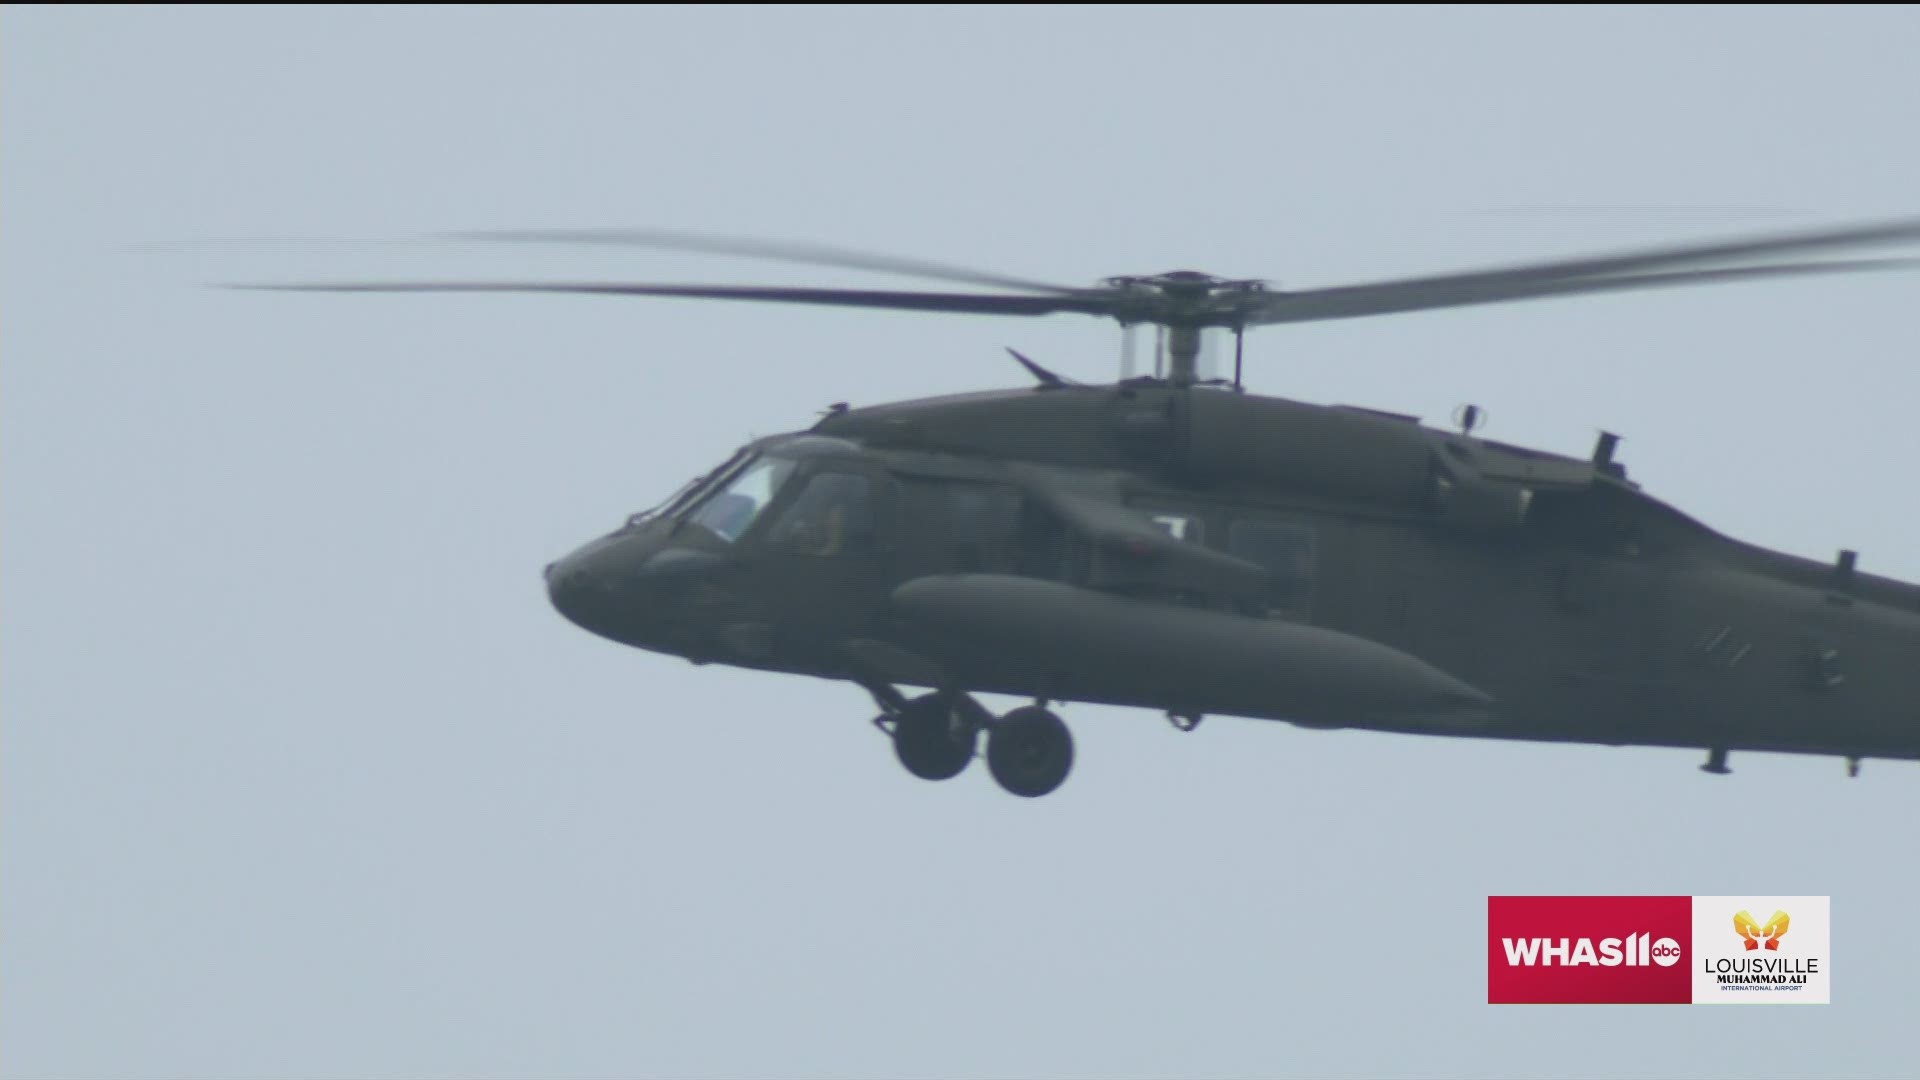 UH-60 Blackhawks can reach speeds of 222 mph.